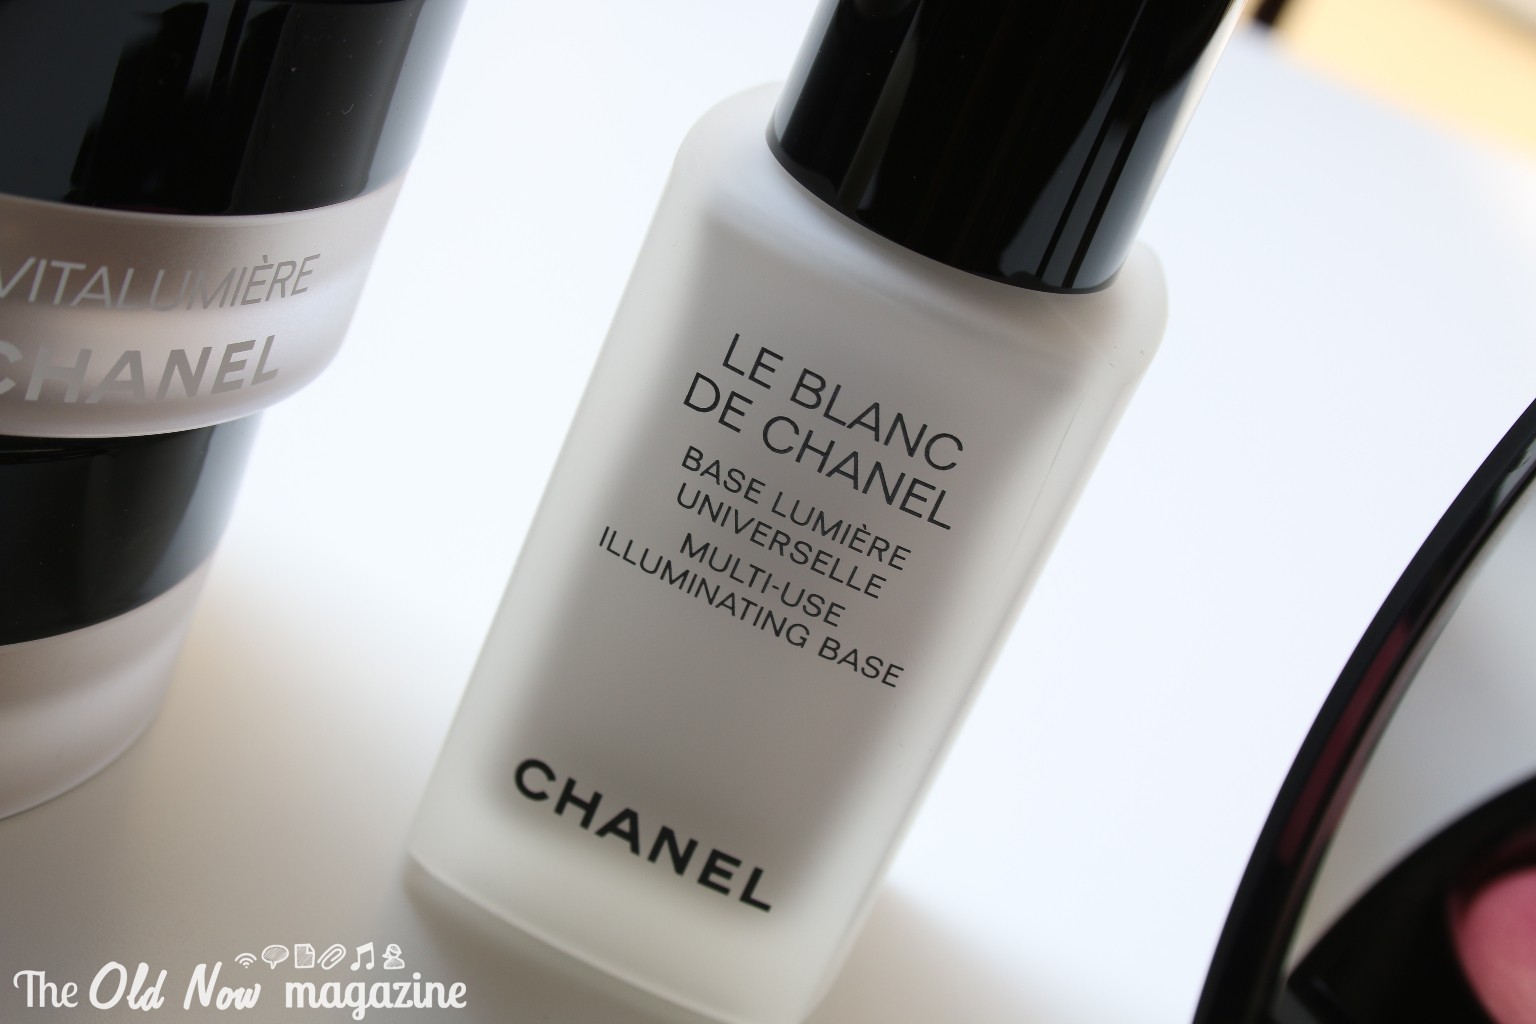 CHANEL  Le blanc de Chanel THEOLDNOW (6)